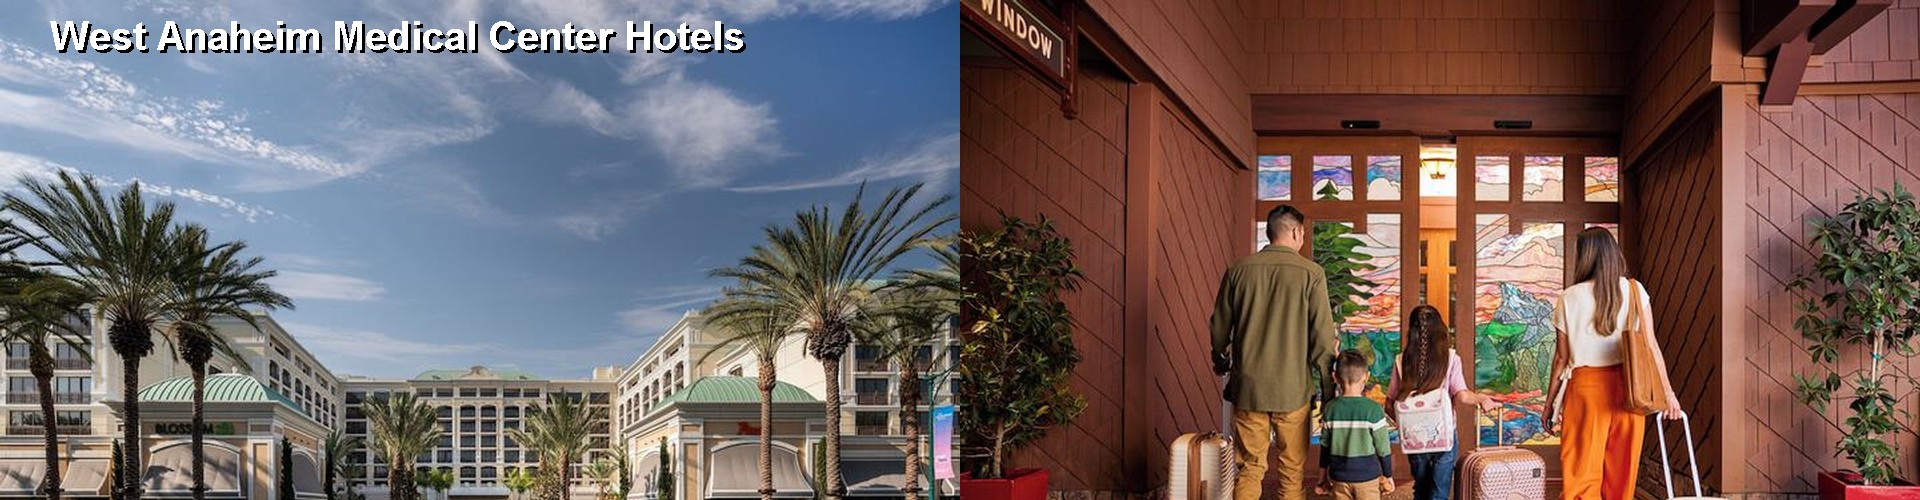 5 Best Hotels near West Anaheim Medical Center